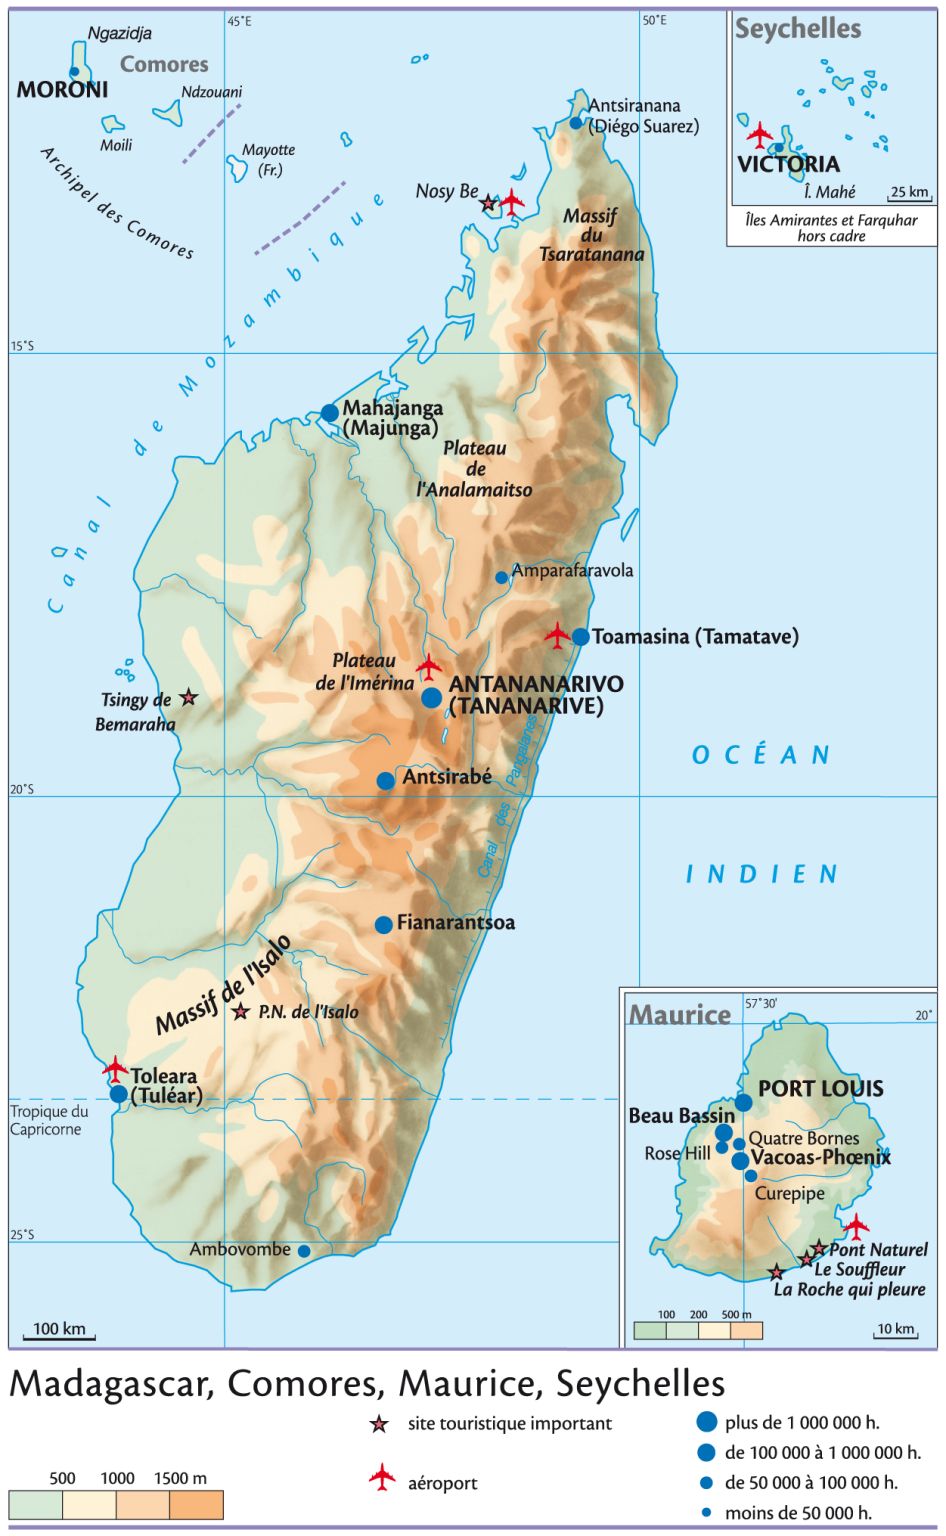 Madagascar, Comores, Maurice, Seychelles